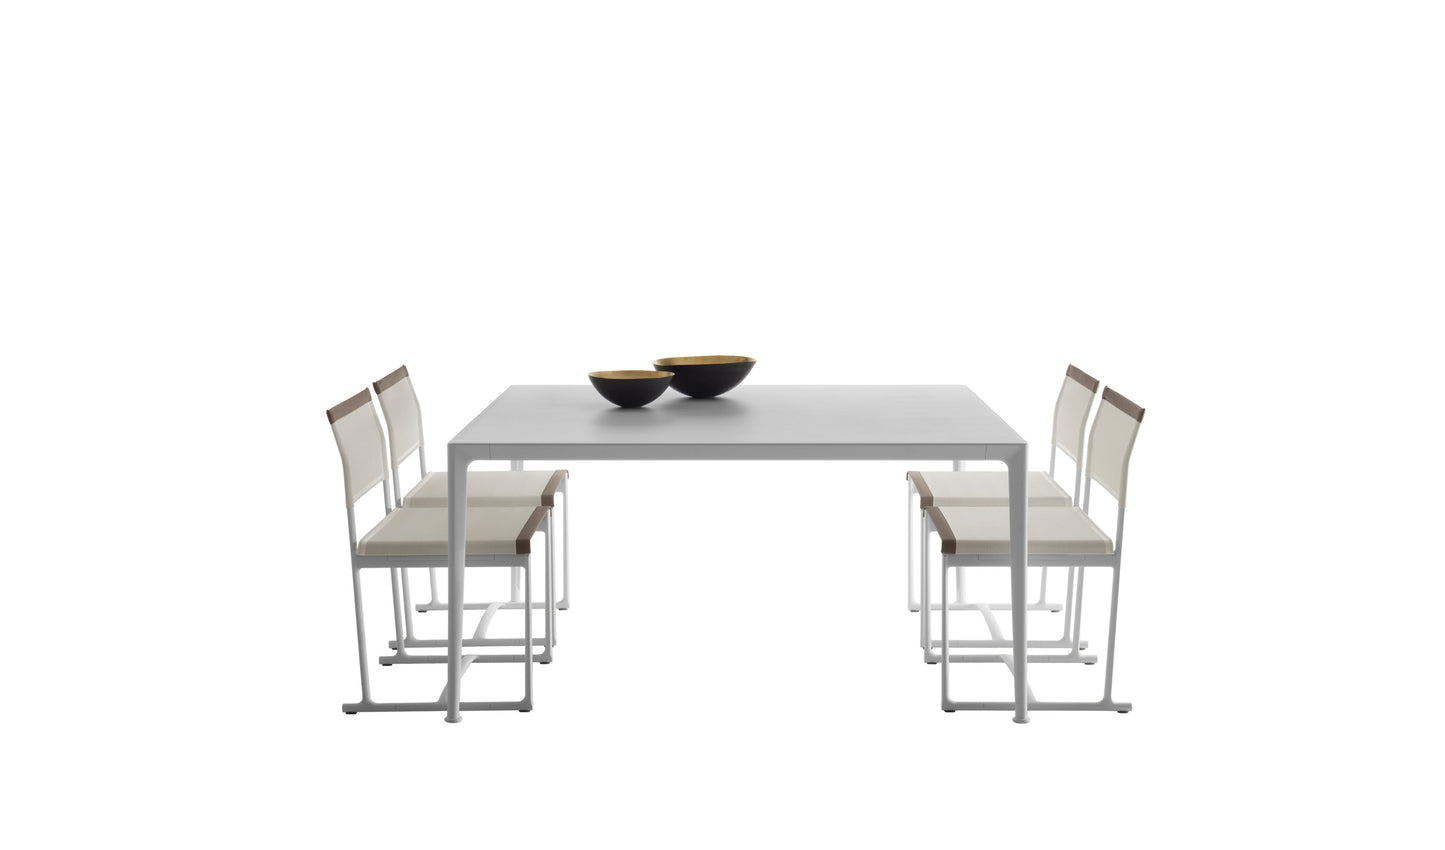 B&B italia Mirto Outdoor Dining Table